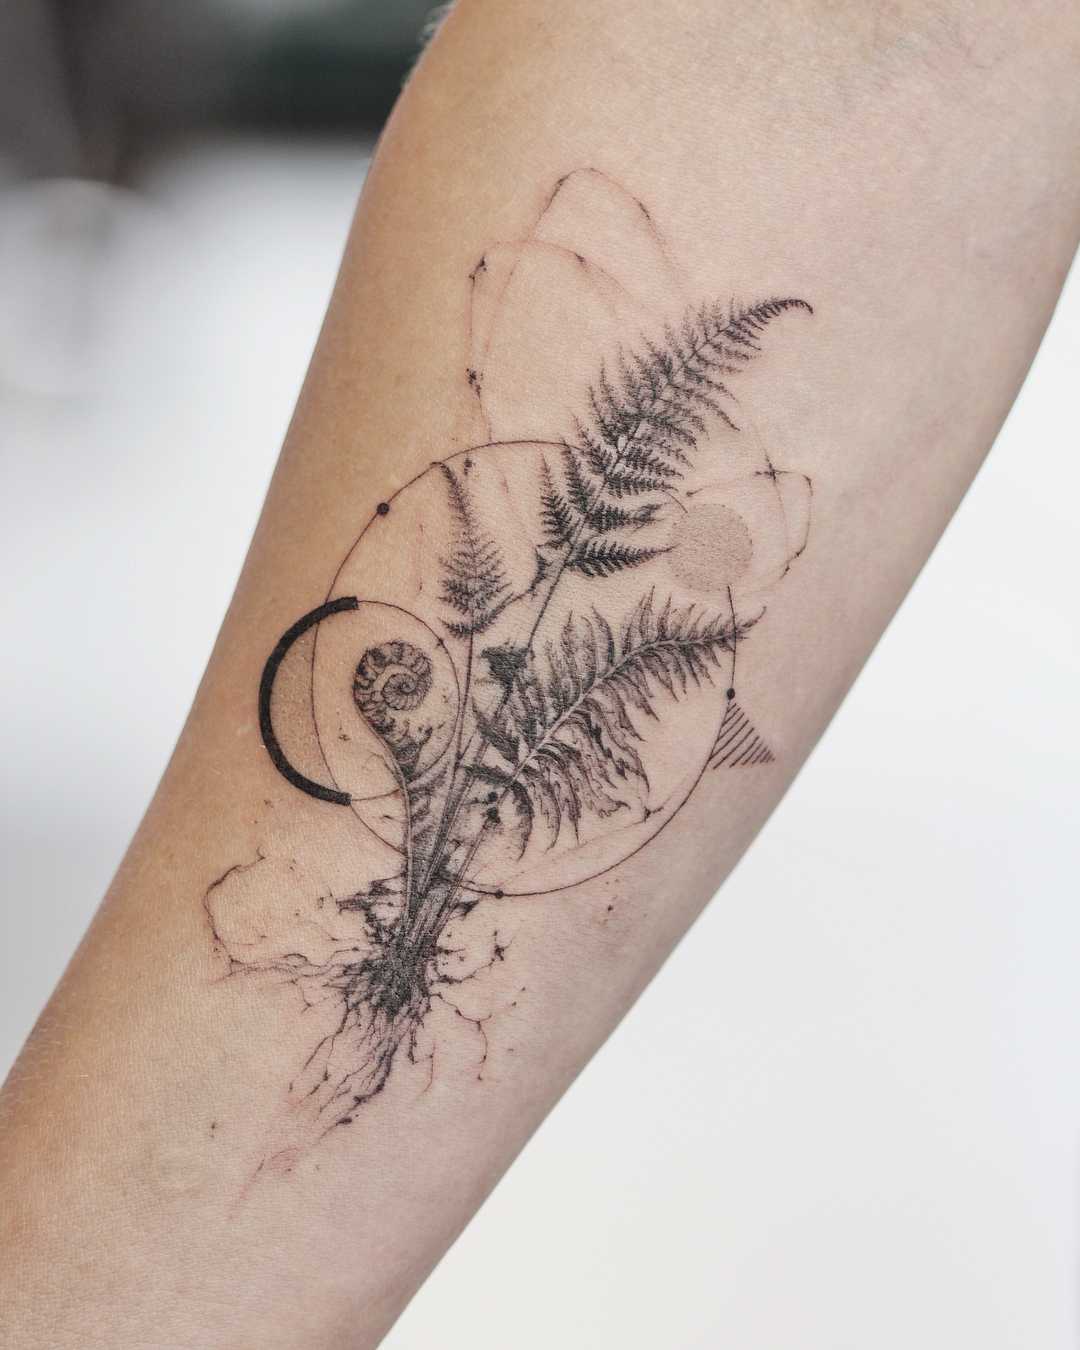 Fern leaf by Luci at Catalpa Studio in Montréal QC Canada : r/tattoos